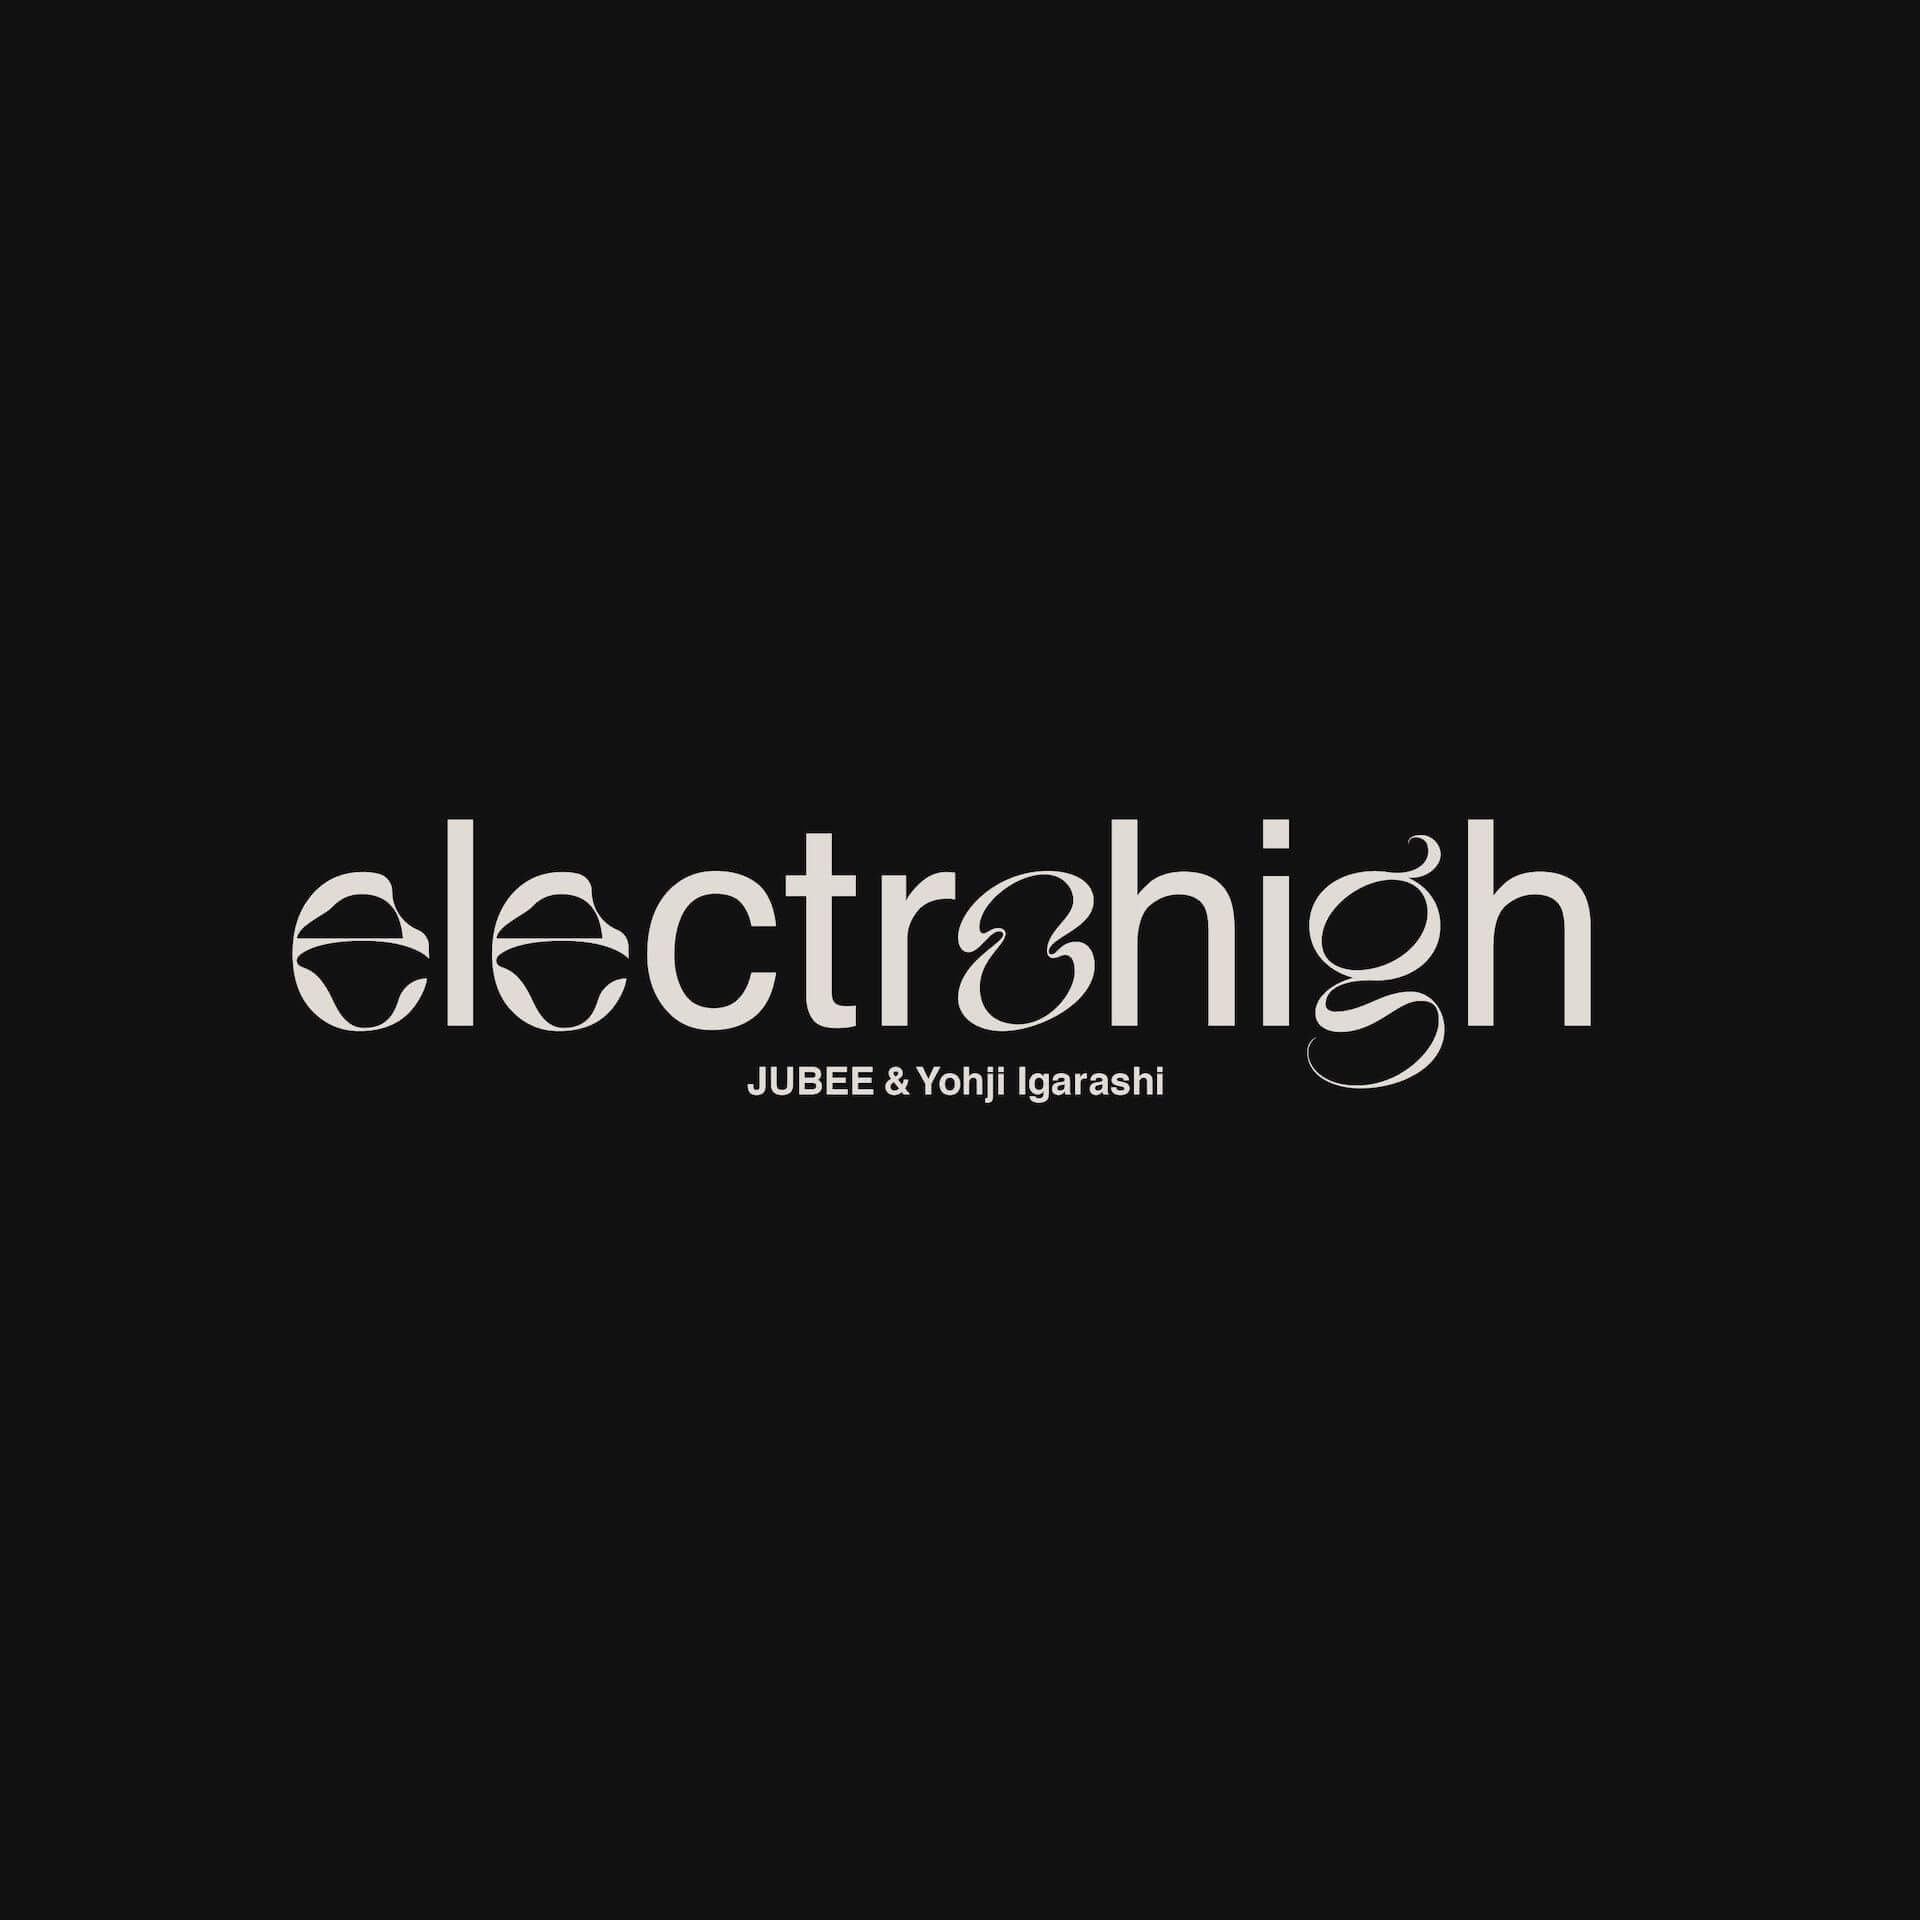 JUBEE＆Yohji IgarashiのコラボレーションEP『electrohigh』がリリース｜コンセプトは「現代のエレクトロ・クラッシュ」、森（どんぐりず）やHIYADAMが参加 music230802-jubee-yohji-igarashi1